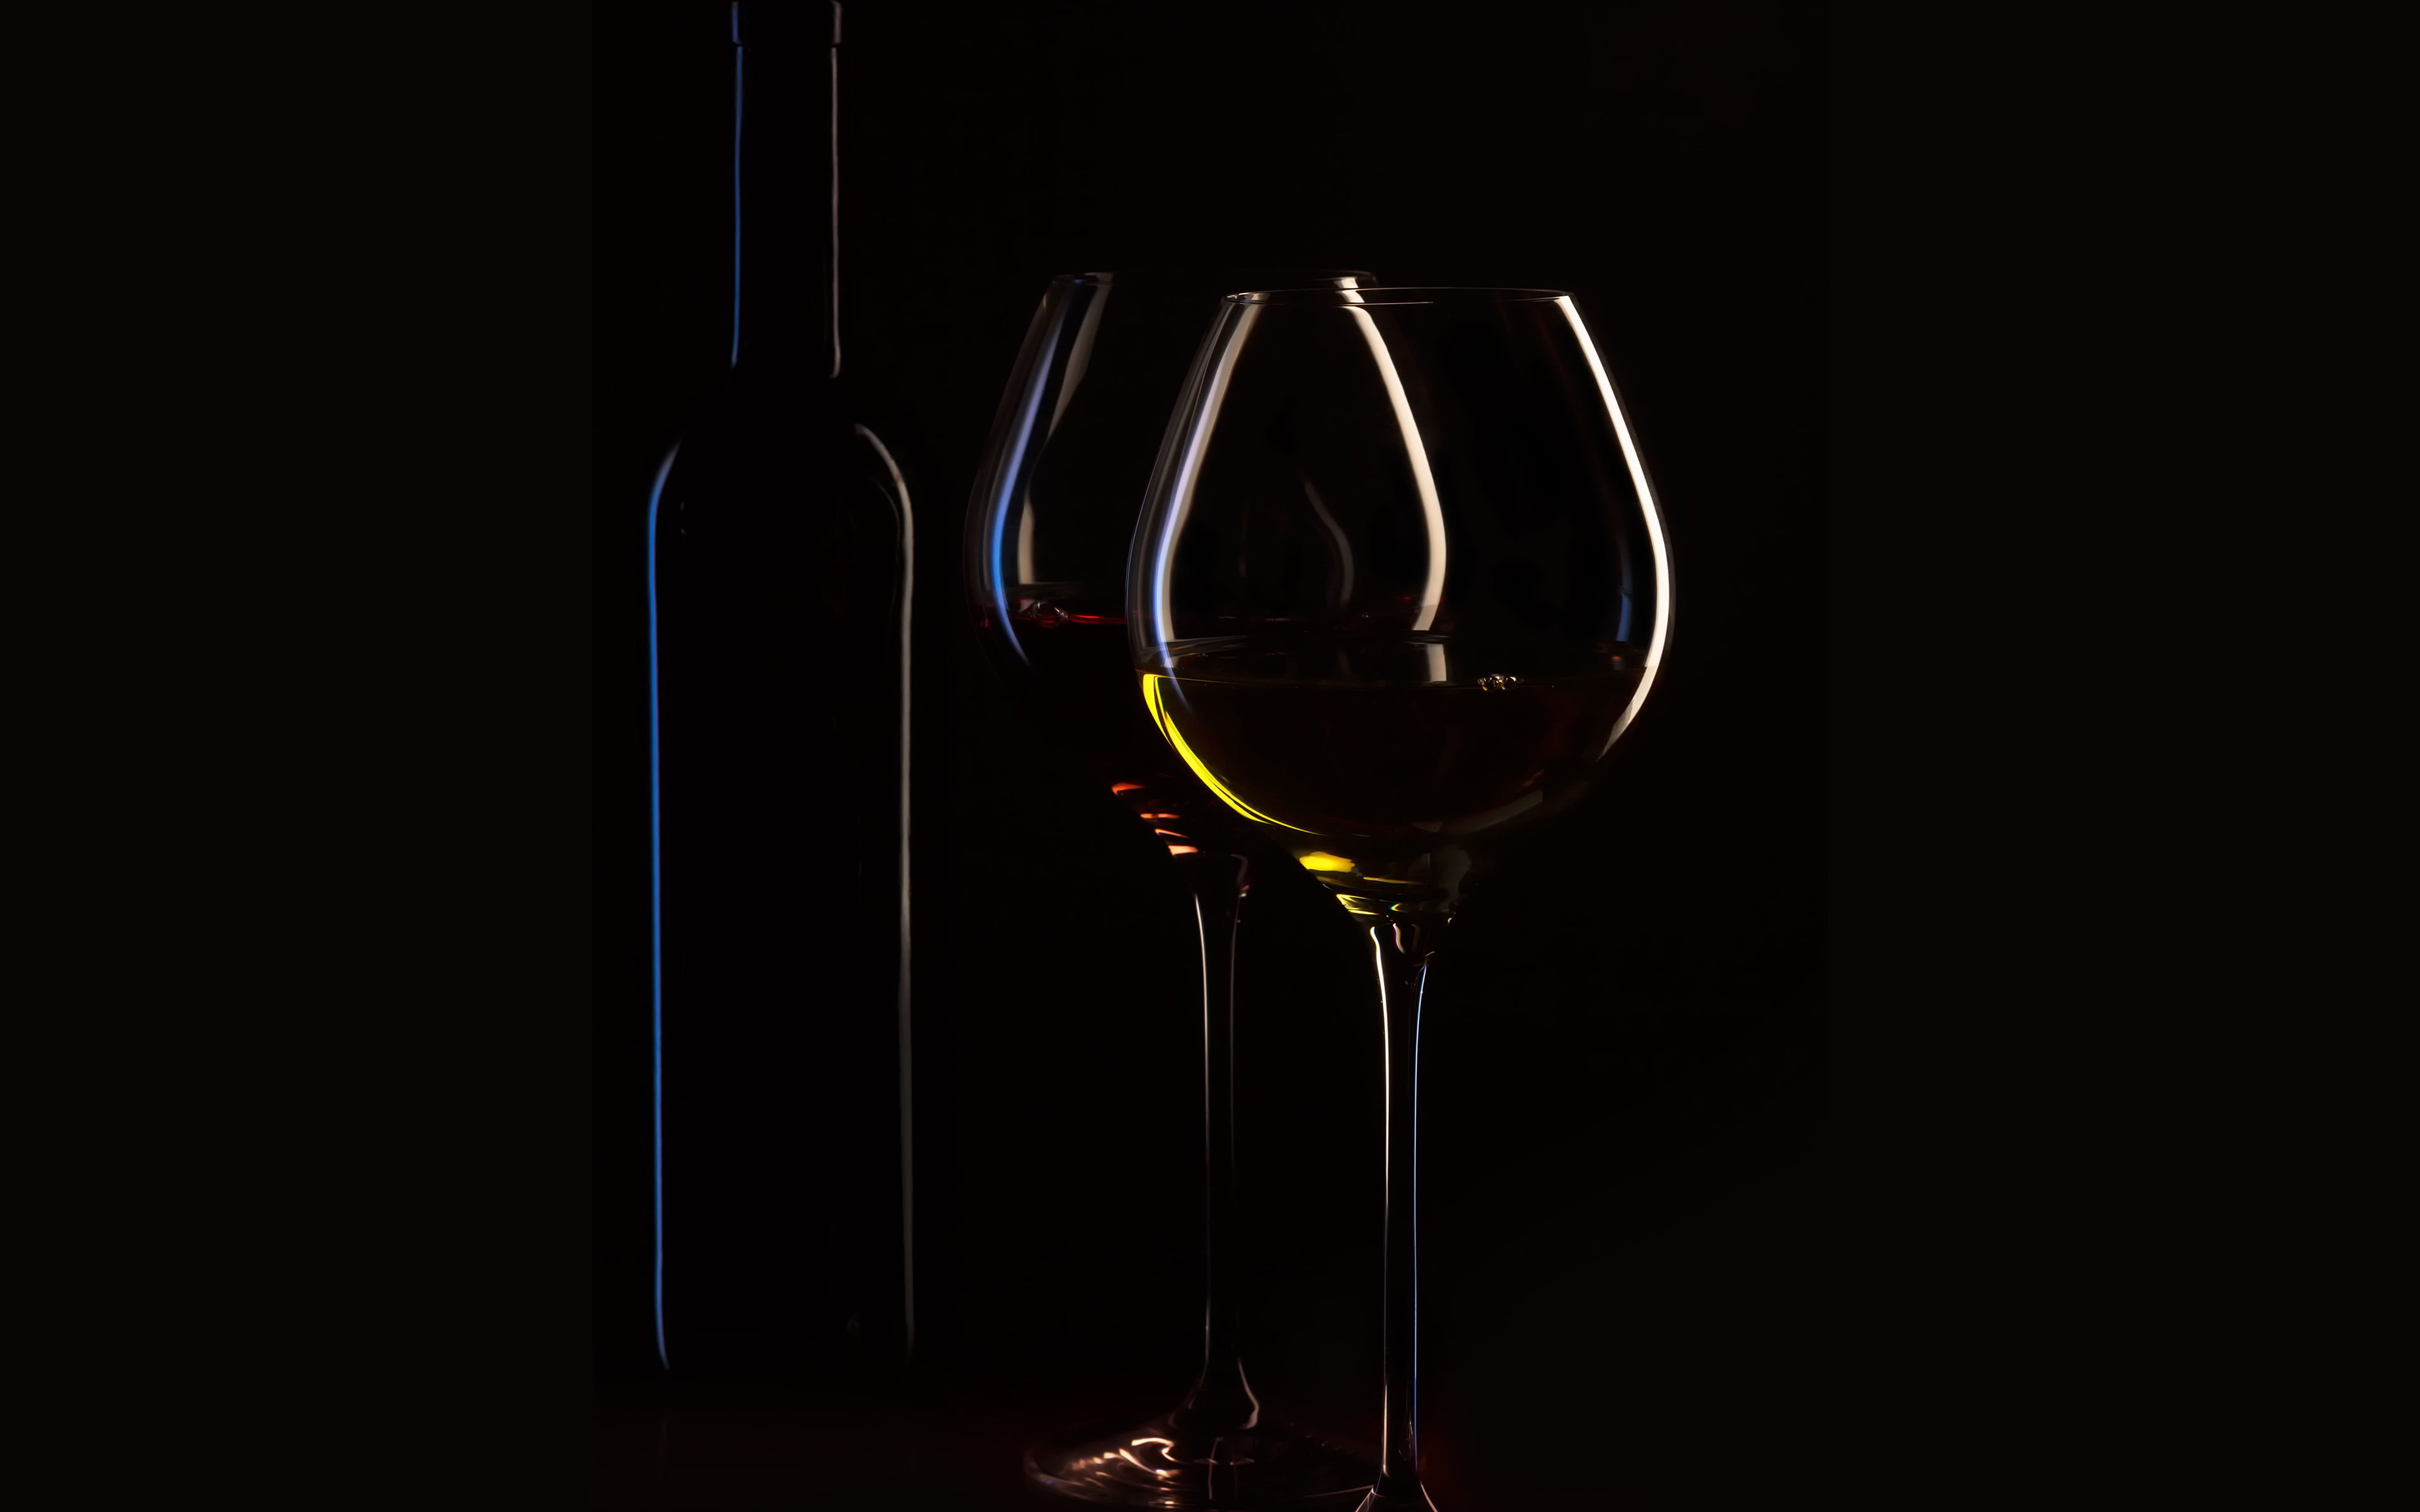 wine, bottle, dark, black, party, refreshment, glass, wineglass